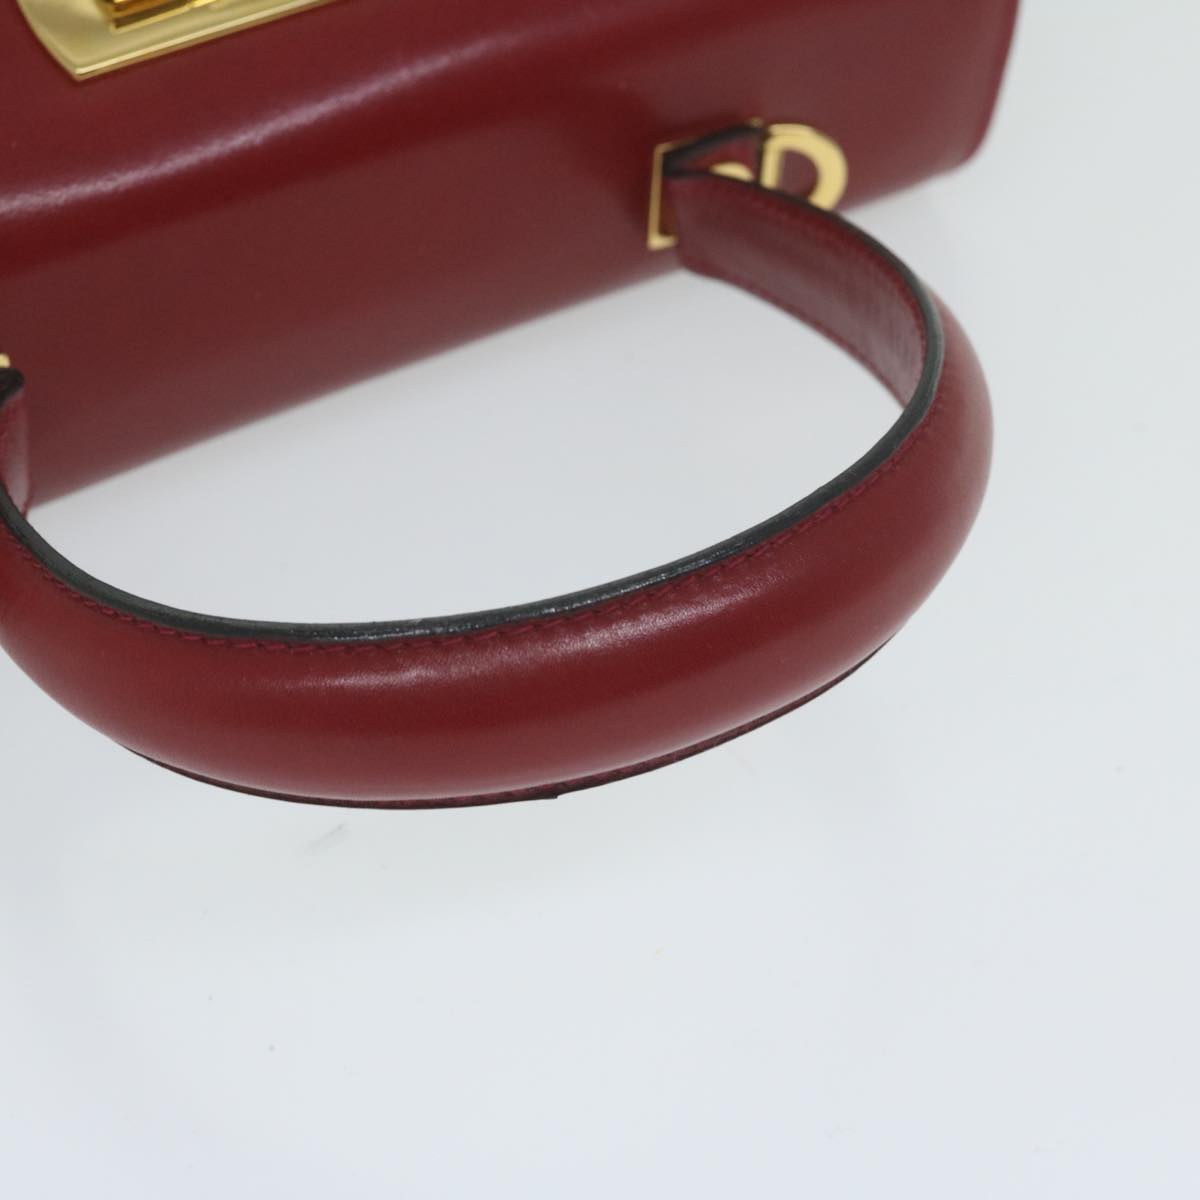 Salvatore Ferragamo Gancini Hand Bag Leather 2way Red Auth 61396